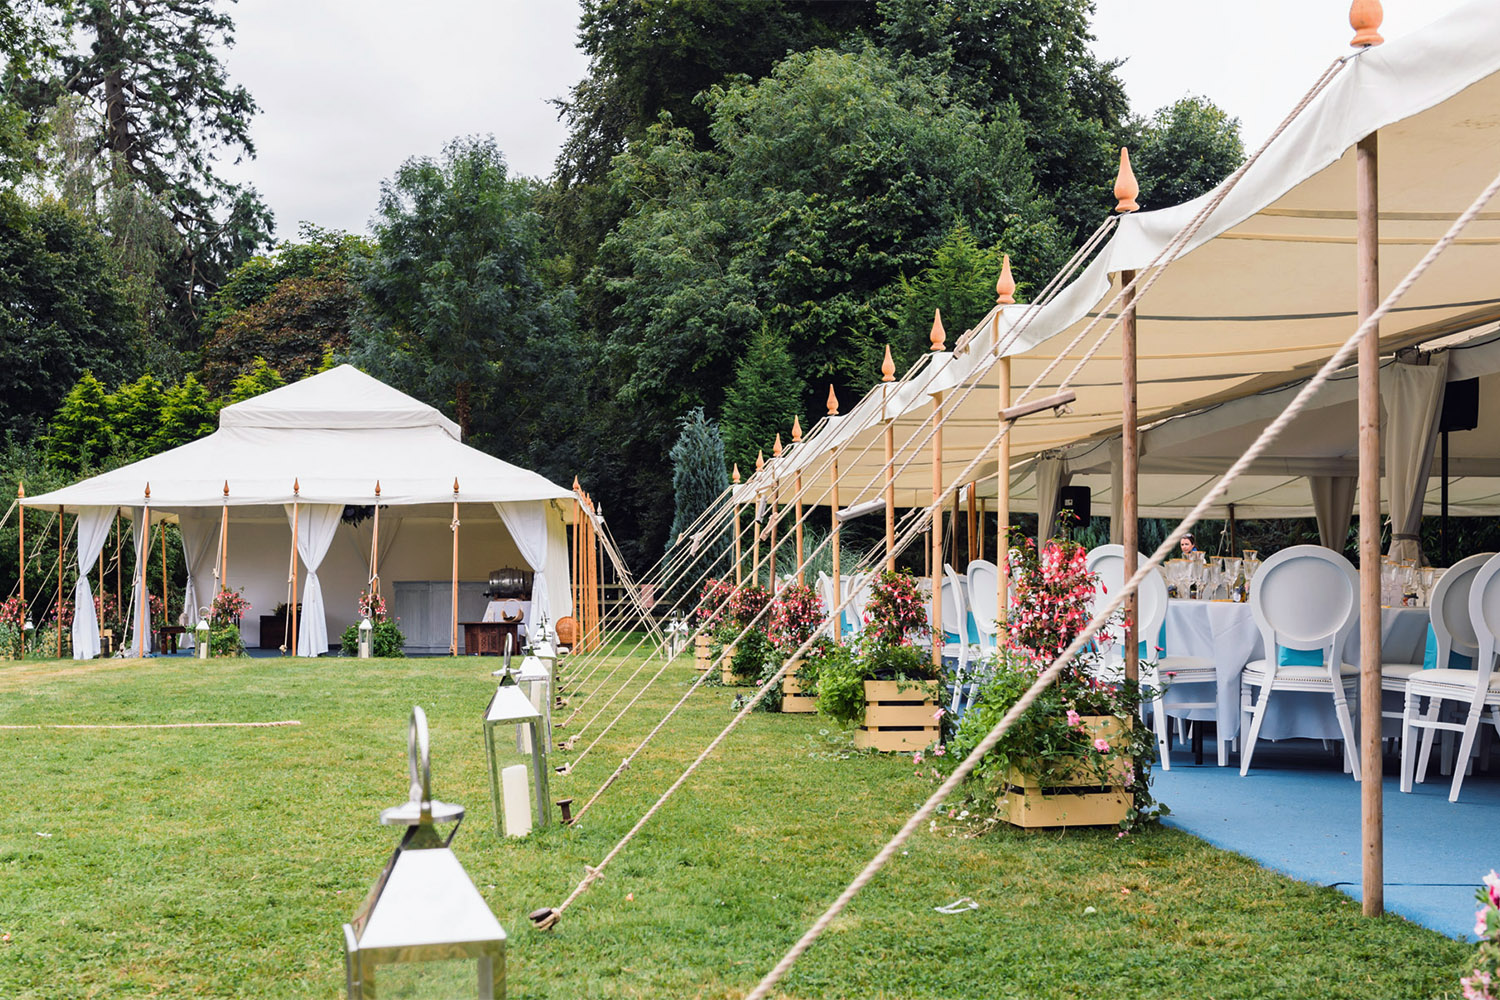 Arabian Tents, luxury wedding marquee hire in the UK